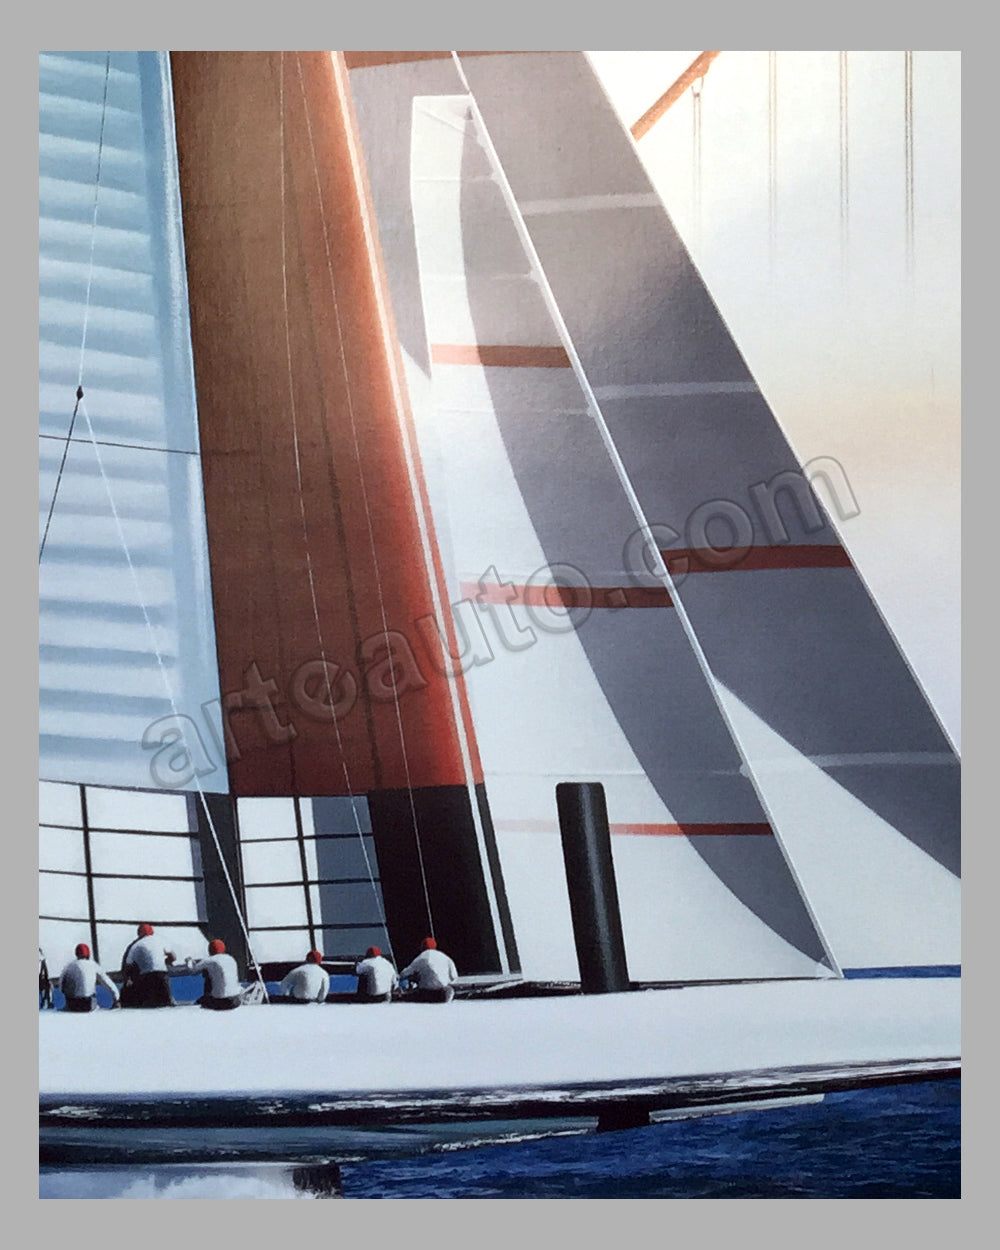 Razzia, Original Louis Vuitton Cup Sailing Poster, Perth Australia